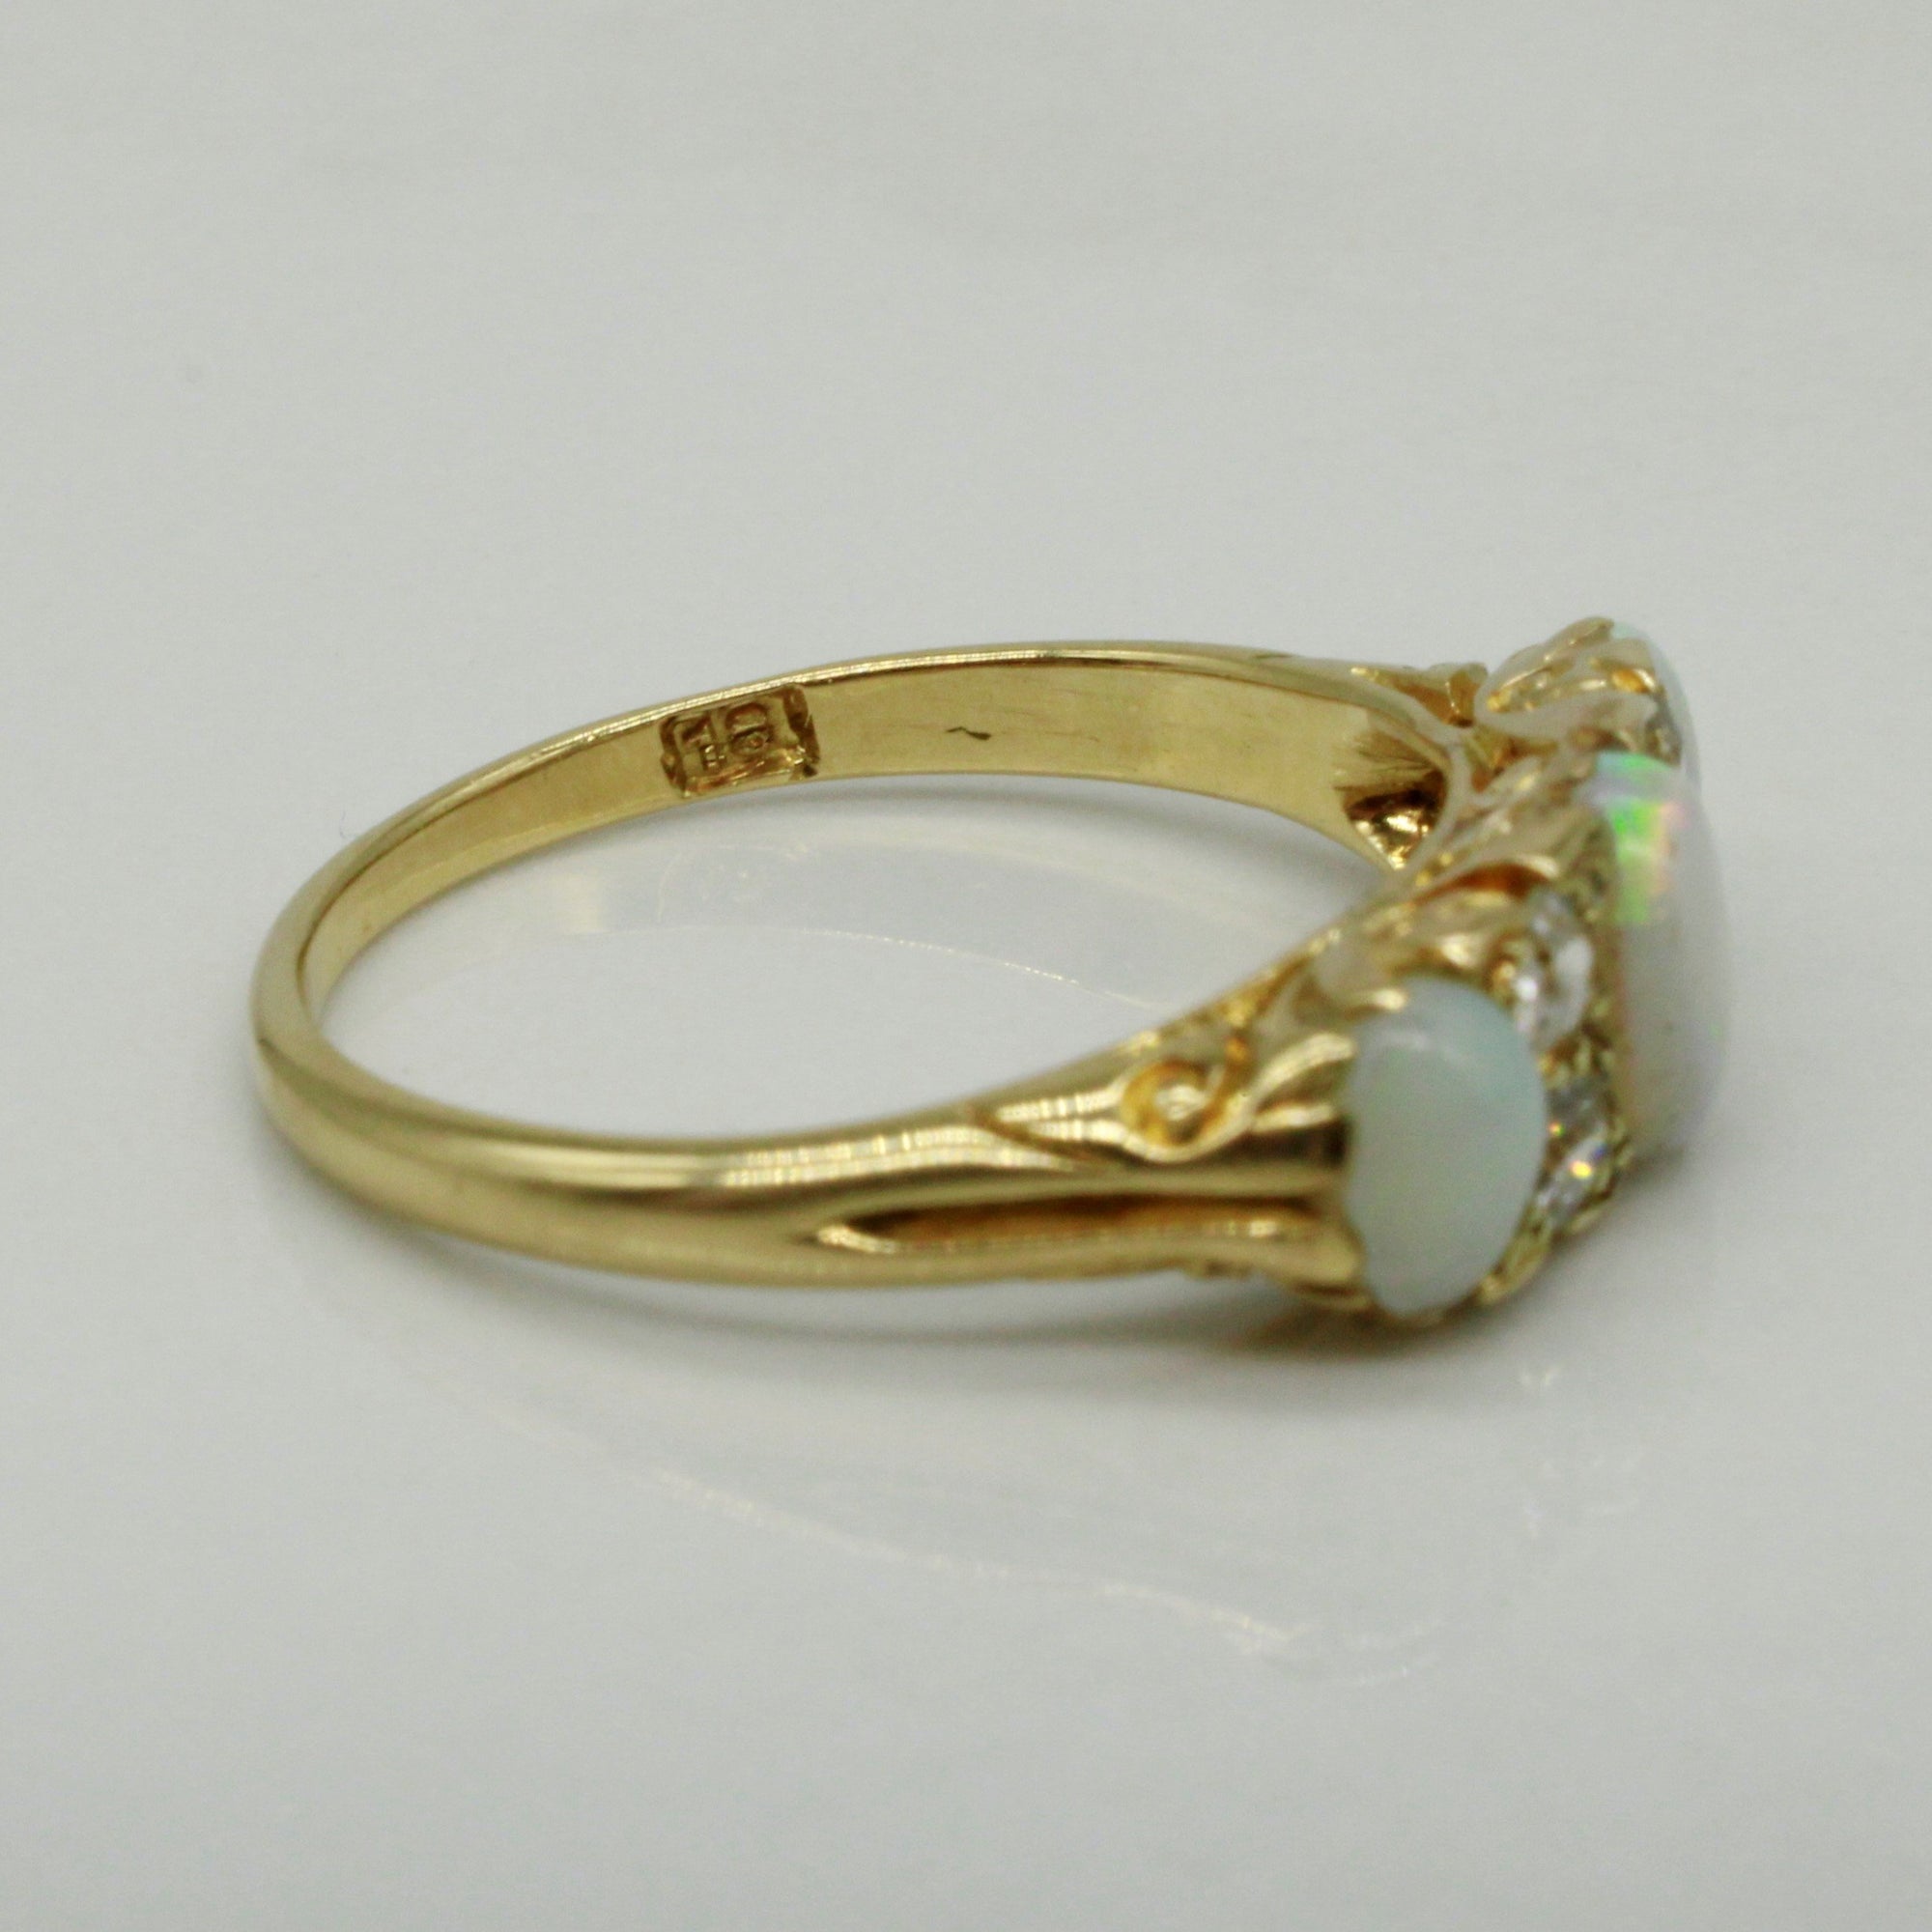 Edwardian Opal Ring | 0.70ctw, 0.24ctw | SZ 7 |